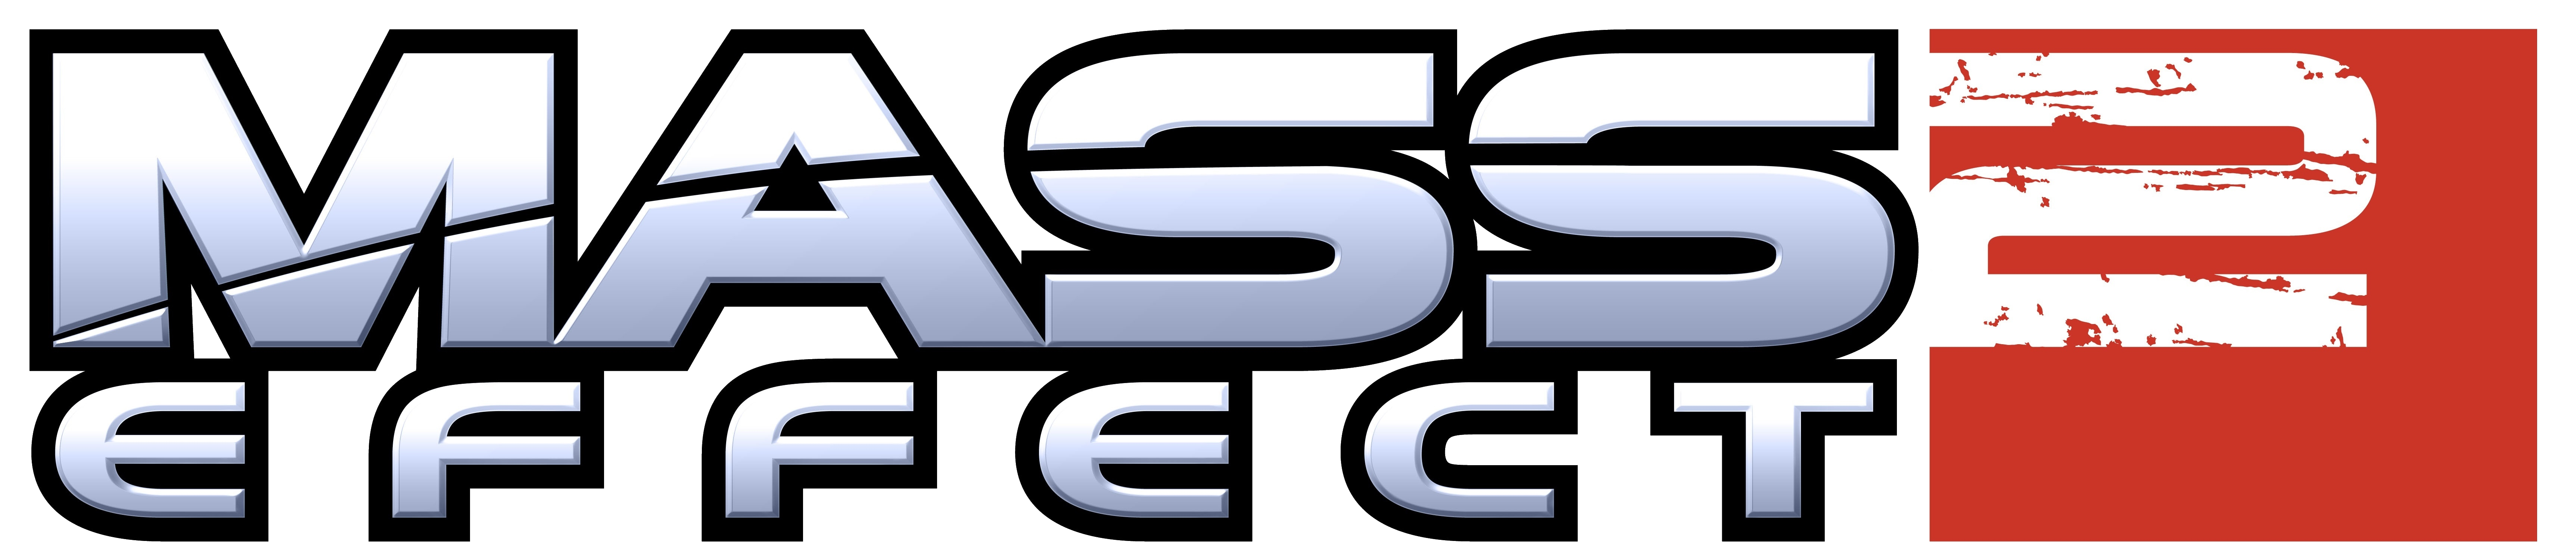 Mass Effect Legendary Edition Guide 511 image 606